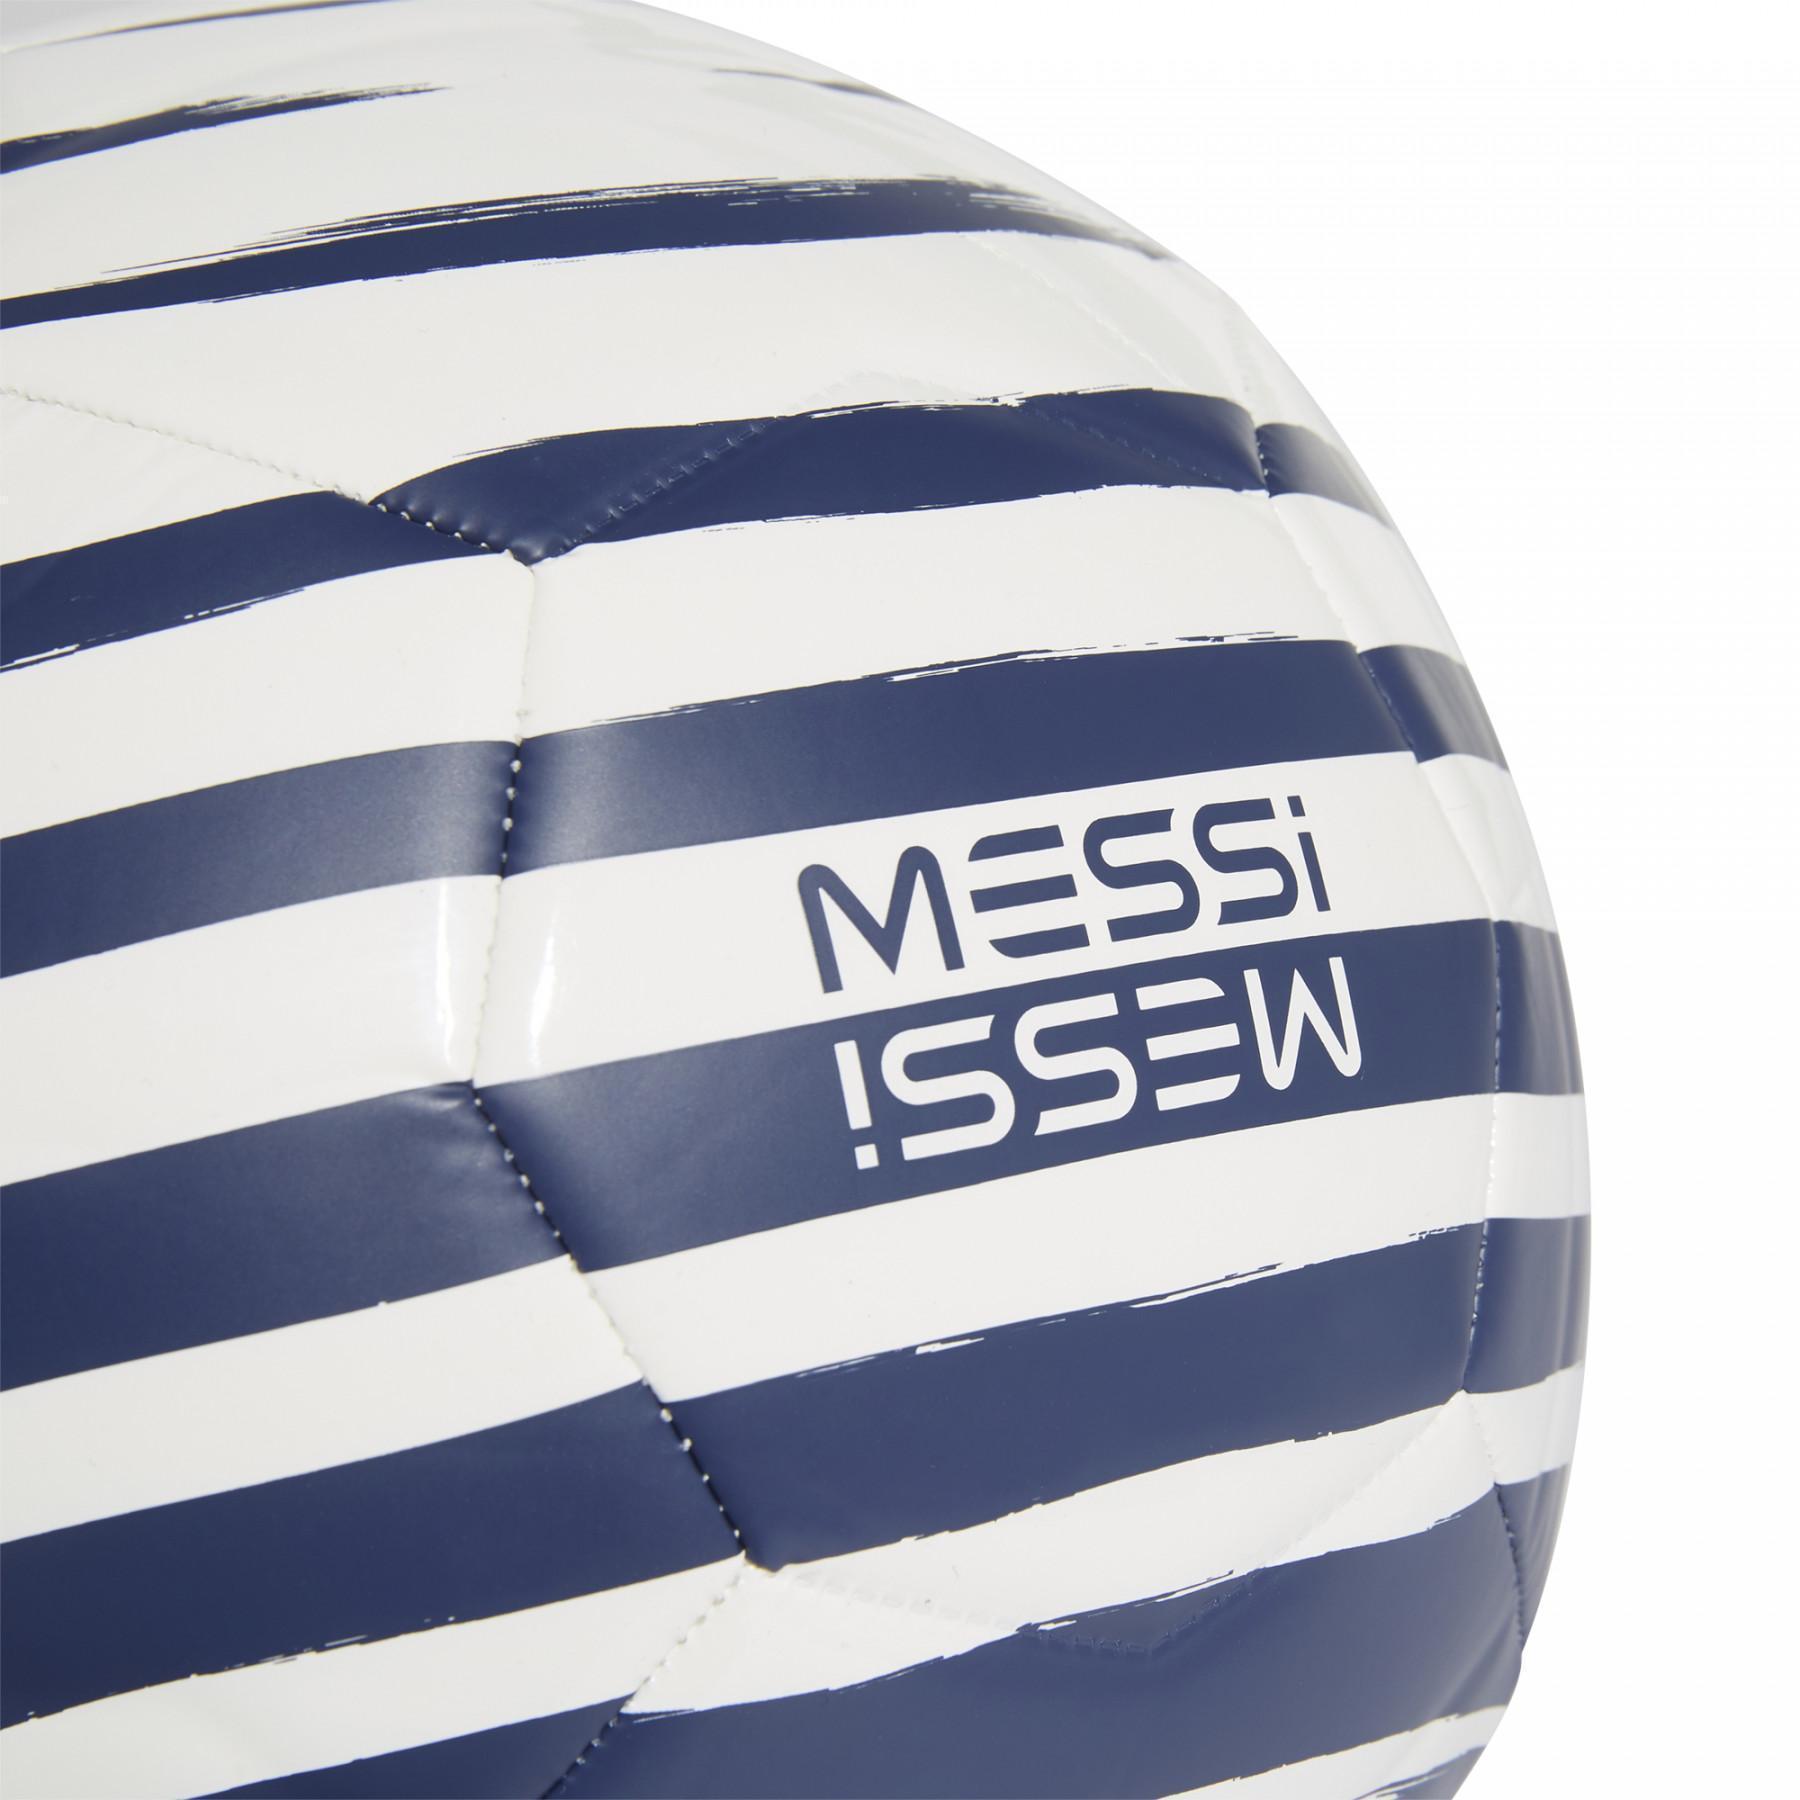 Pallone adidas Messi Club